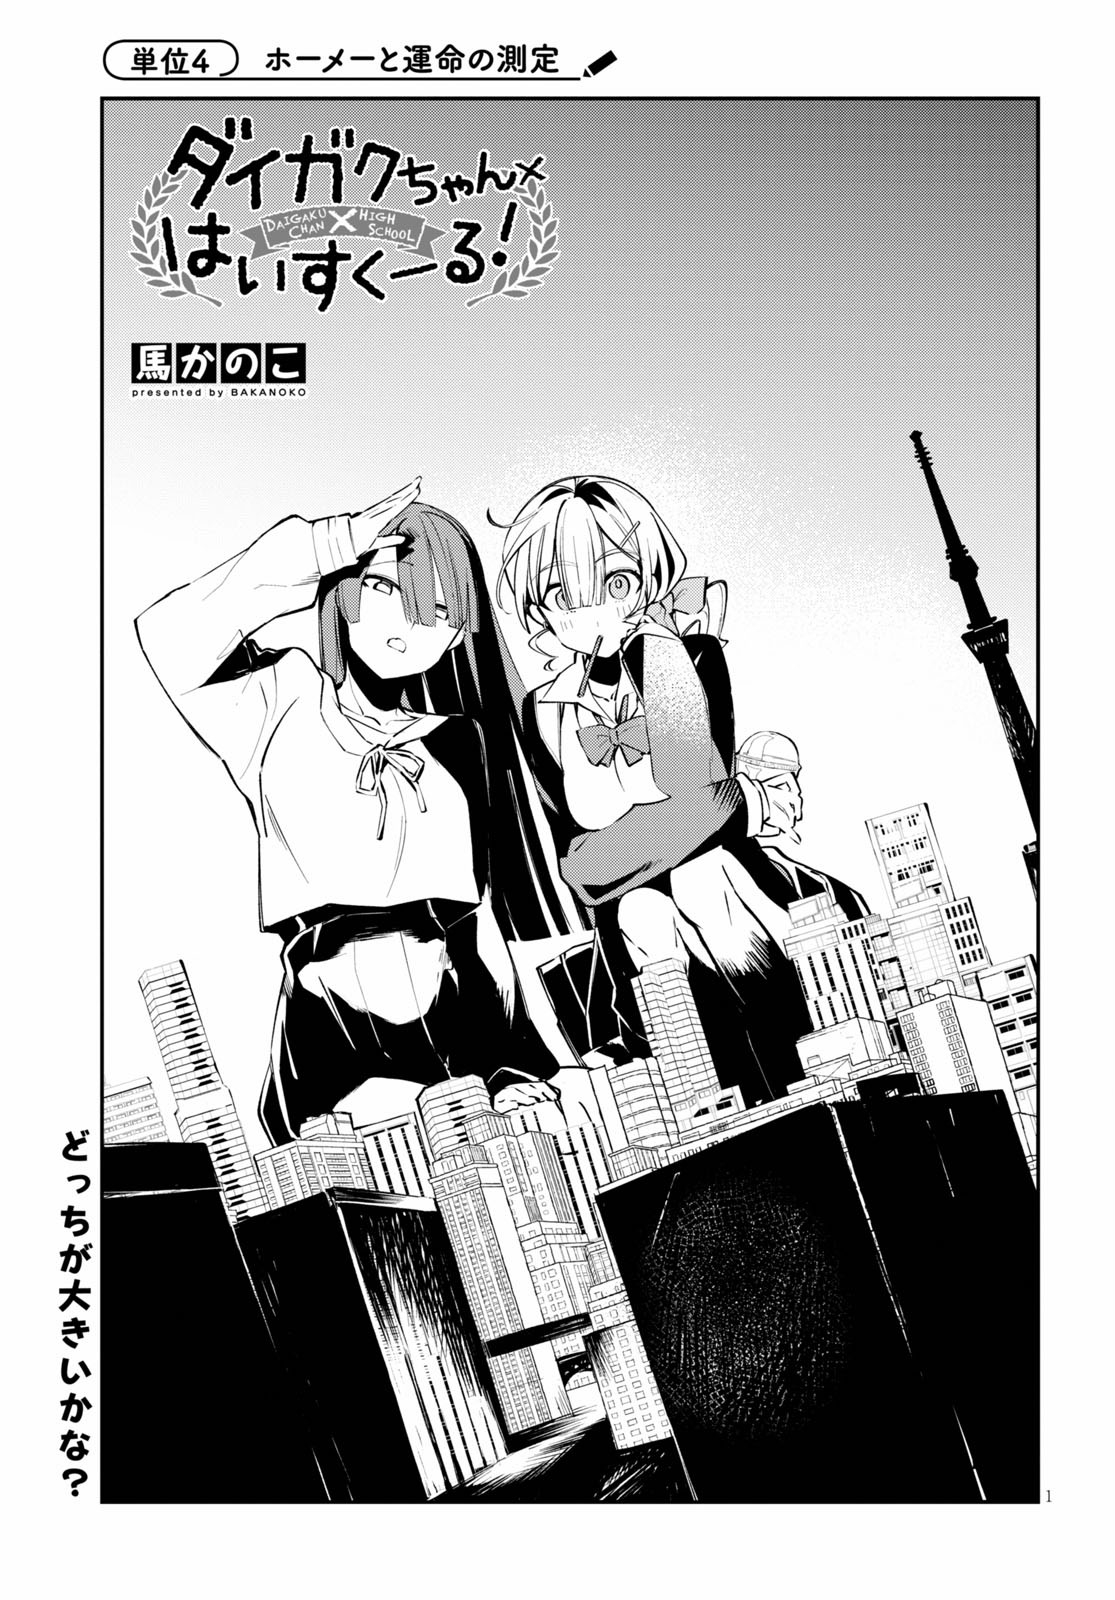 Daigaku-chan × High School - Chapter 4 - Page 1